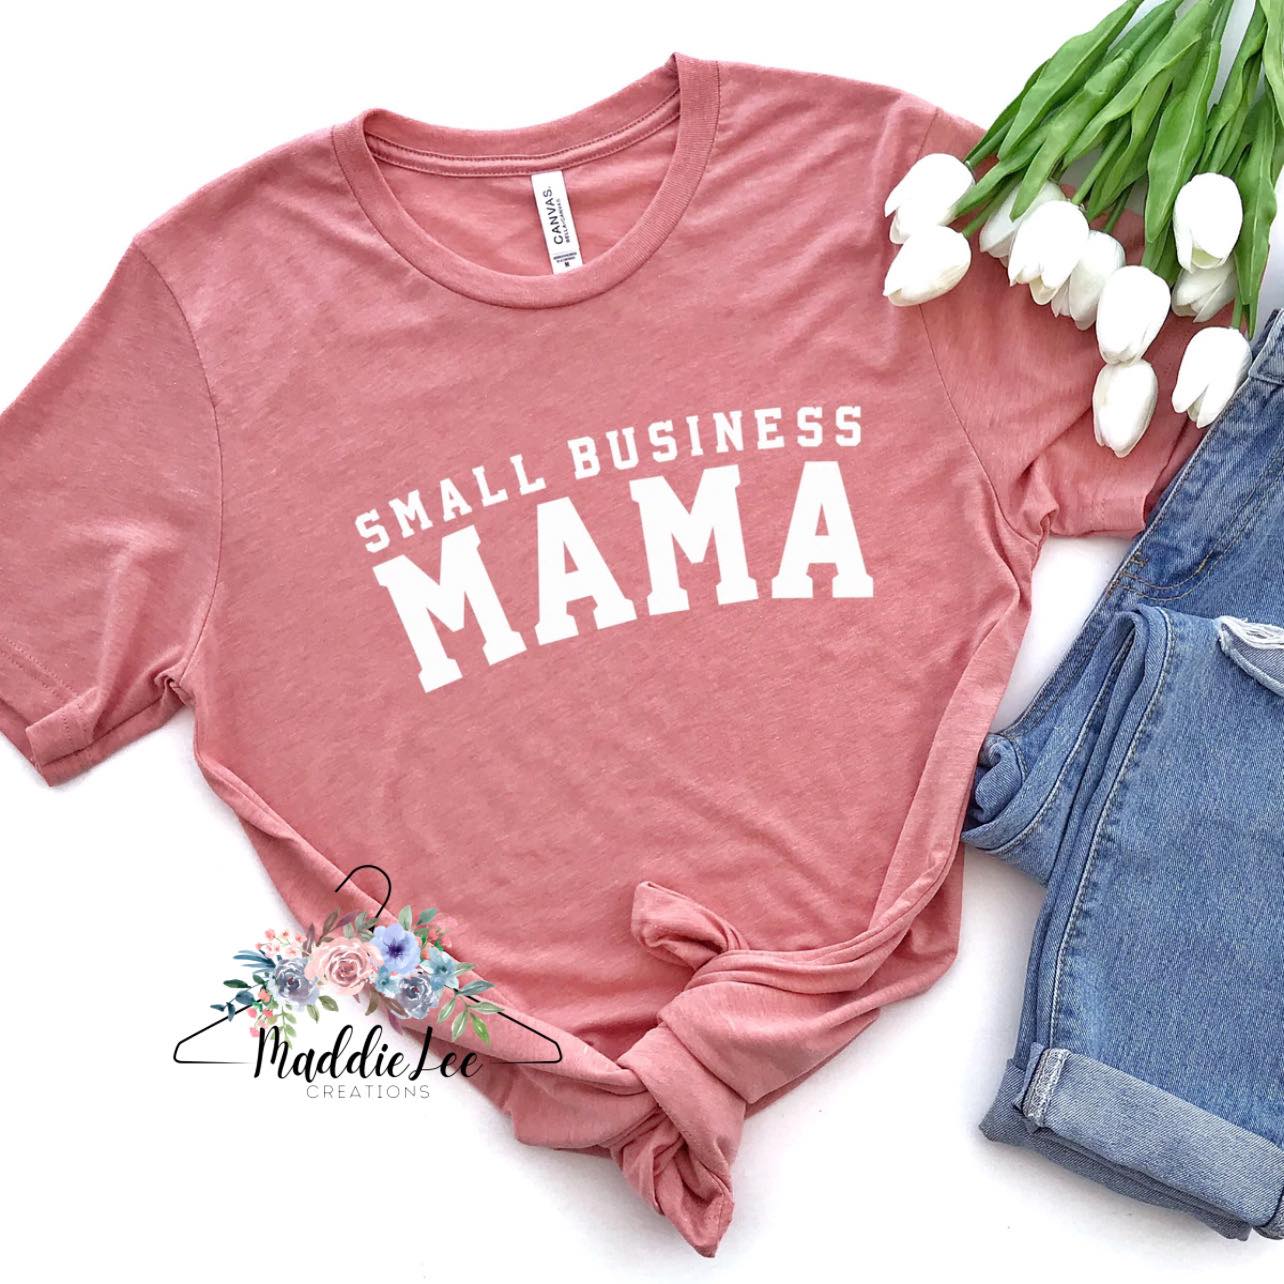 Small Business Mama Adult Tee